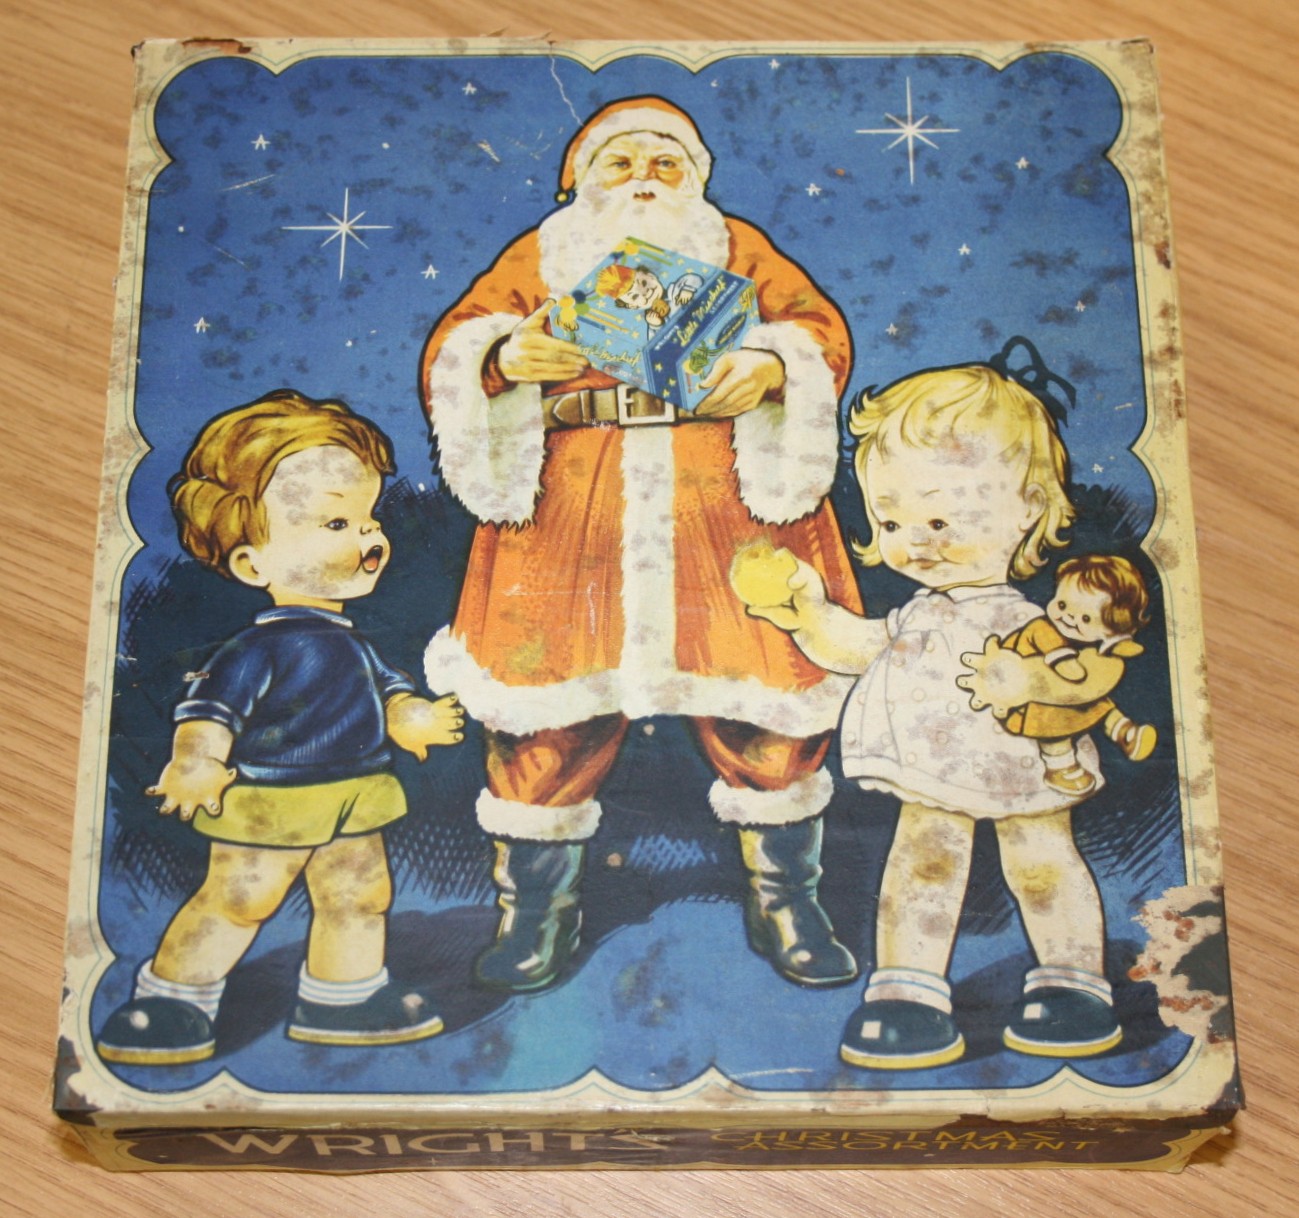 Wright's Christmas Assortment tin